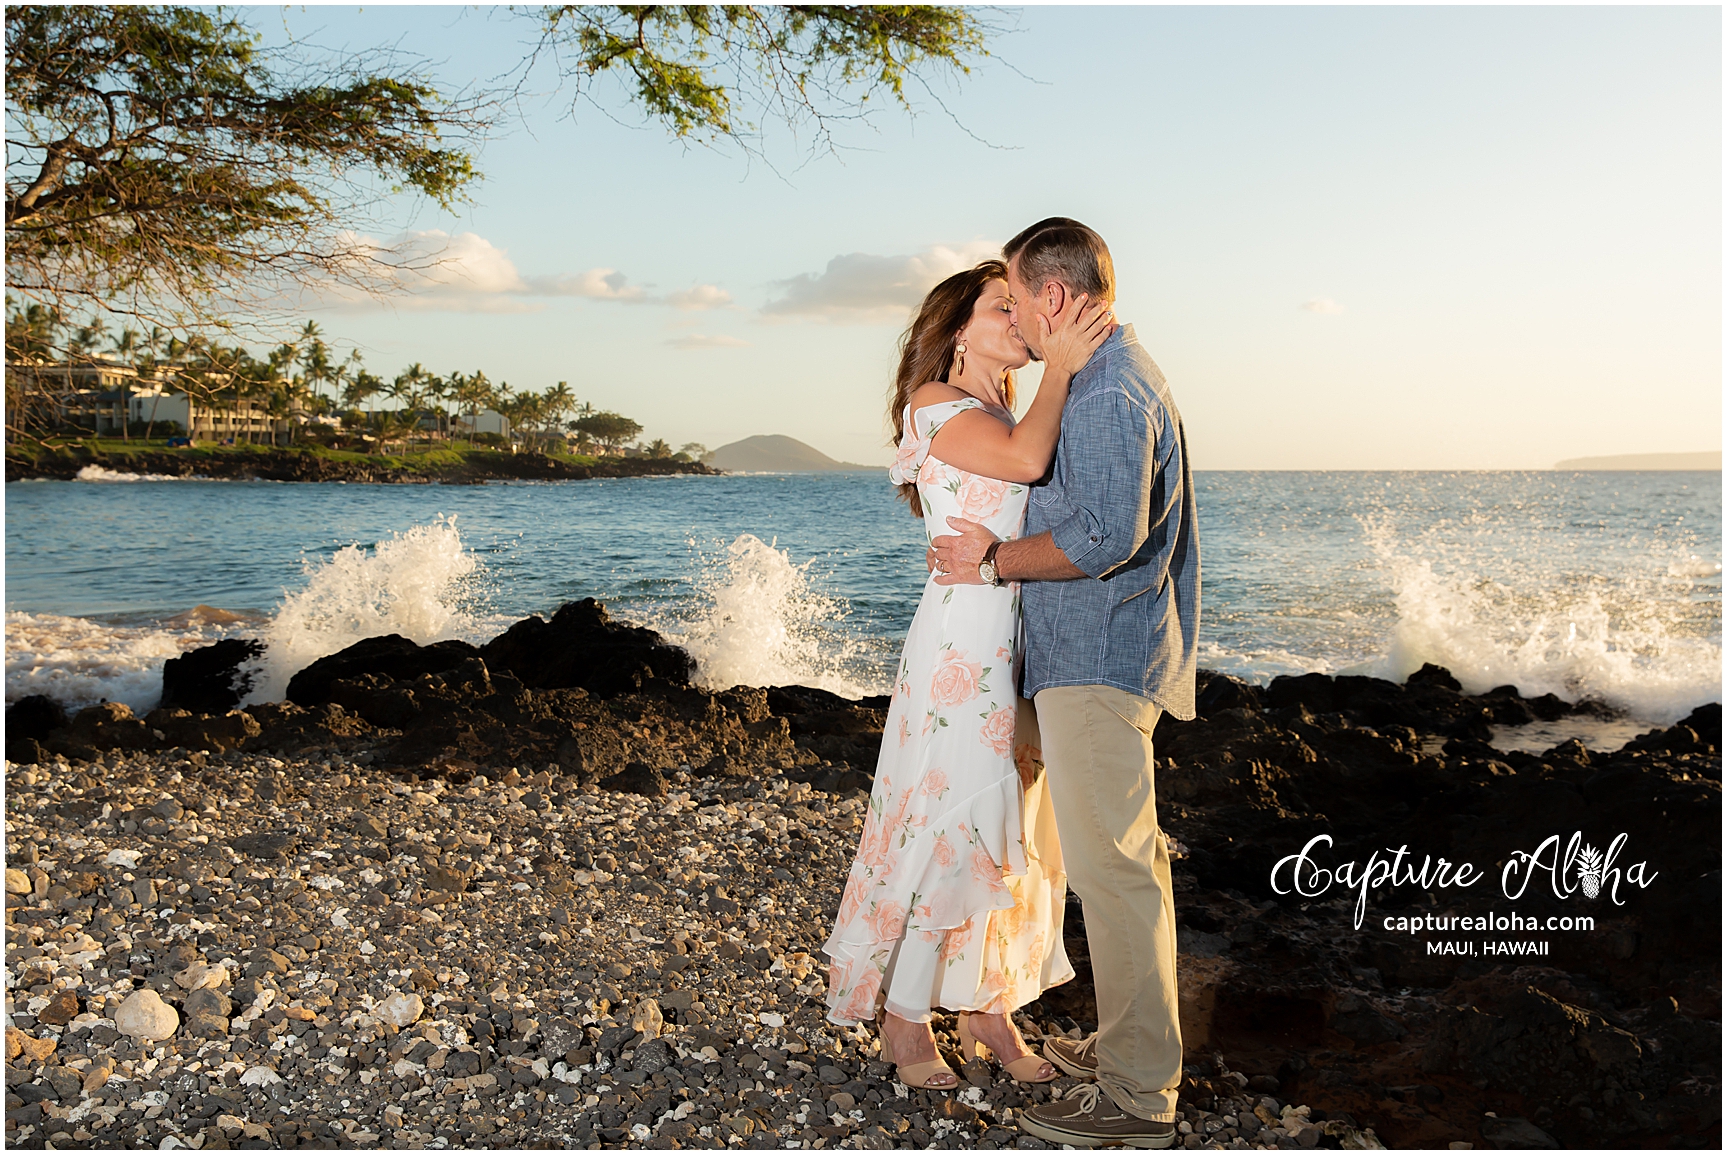 Maui Couples Photography at Mokapu Beach, Maui at sunset with couple kissing